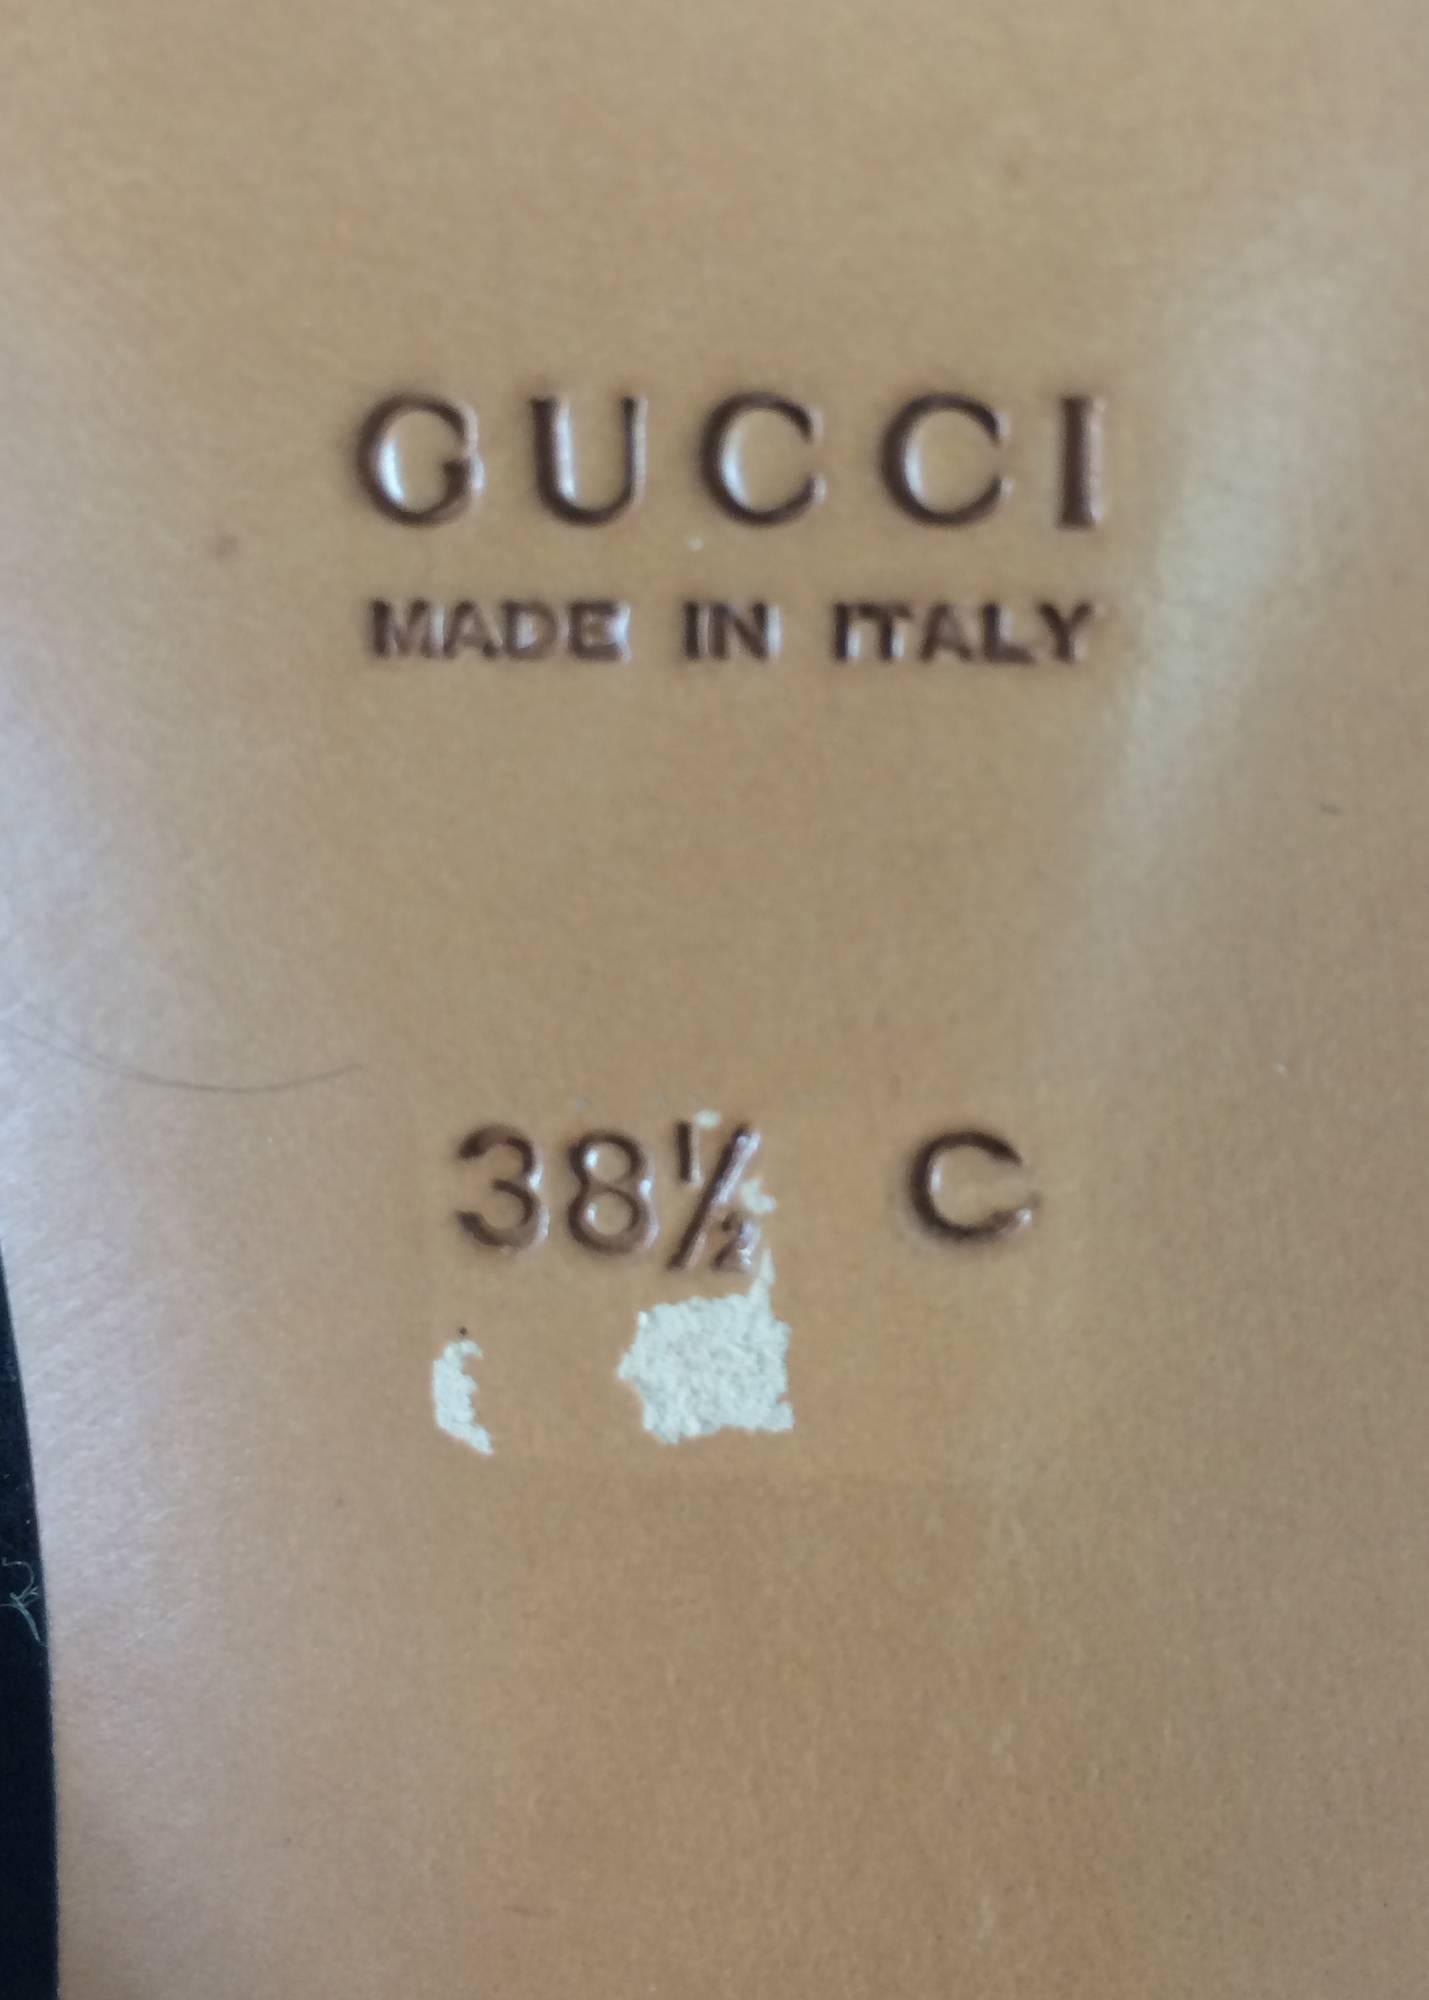 Women's Gucci chunky black suede rhinestone bit loafers 38 1/2 C